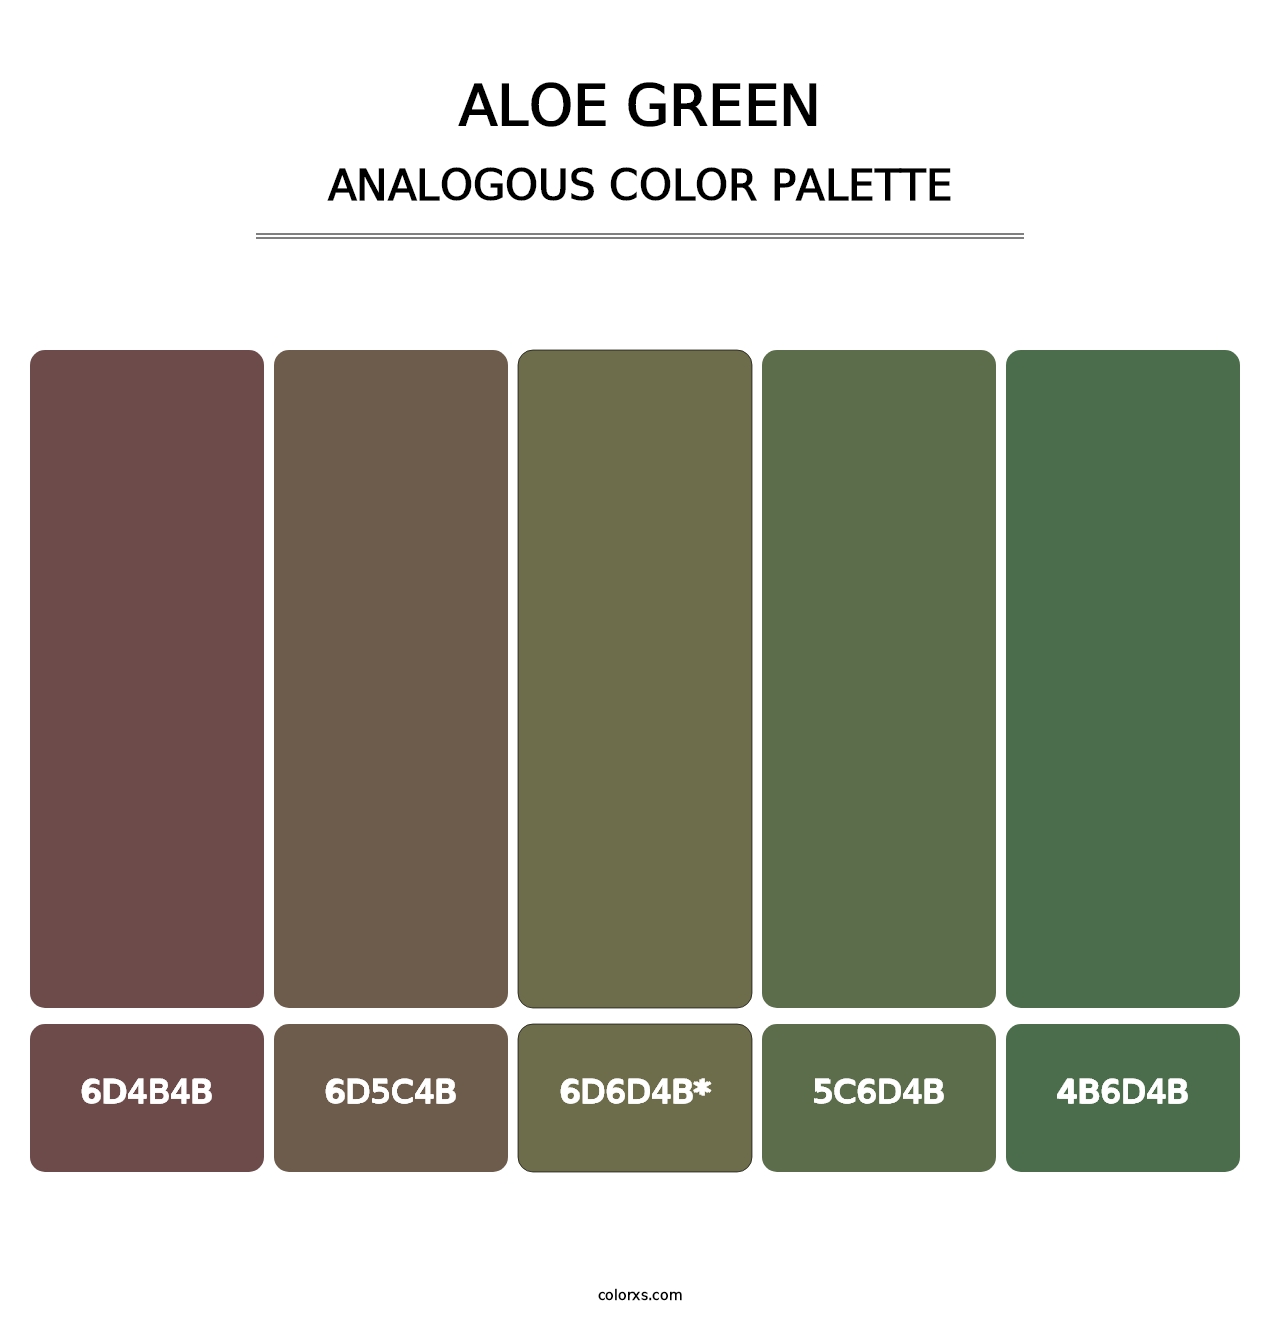 Aloe Green - Analogous Color Palette